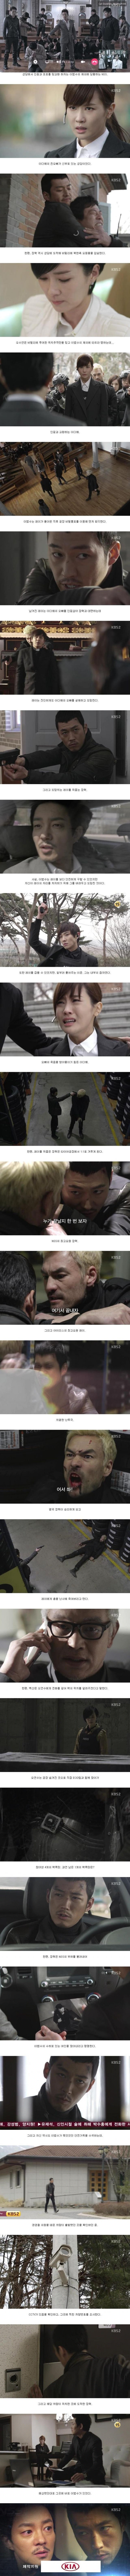 episode 14 captures for the Korean drama 'IRIS 2'